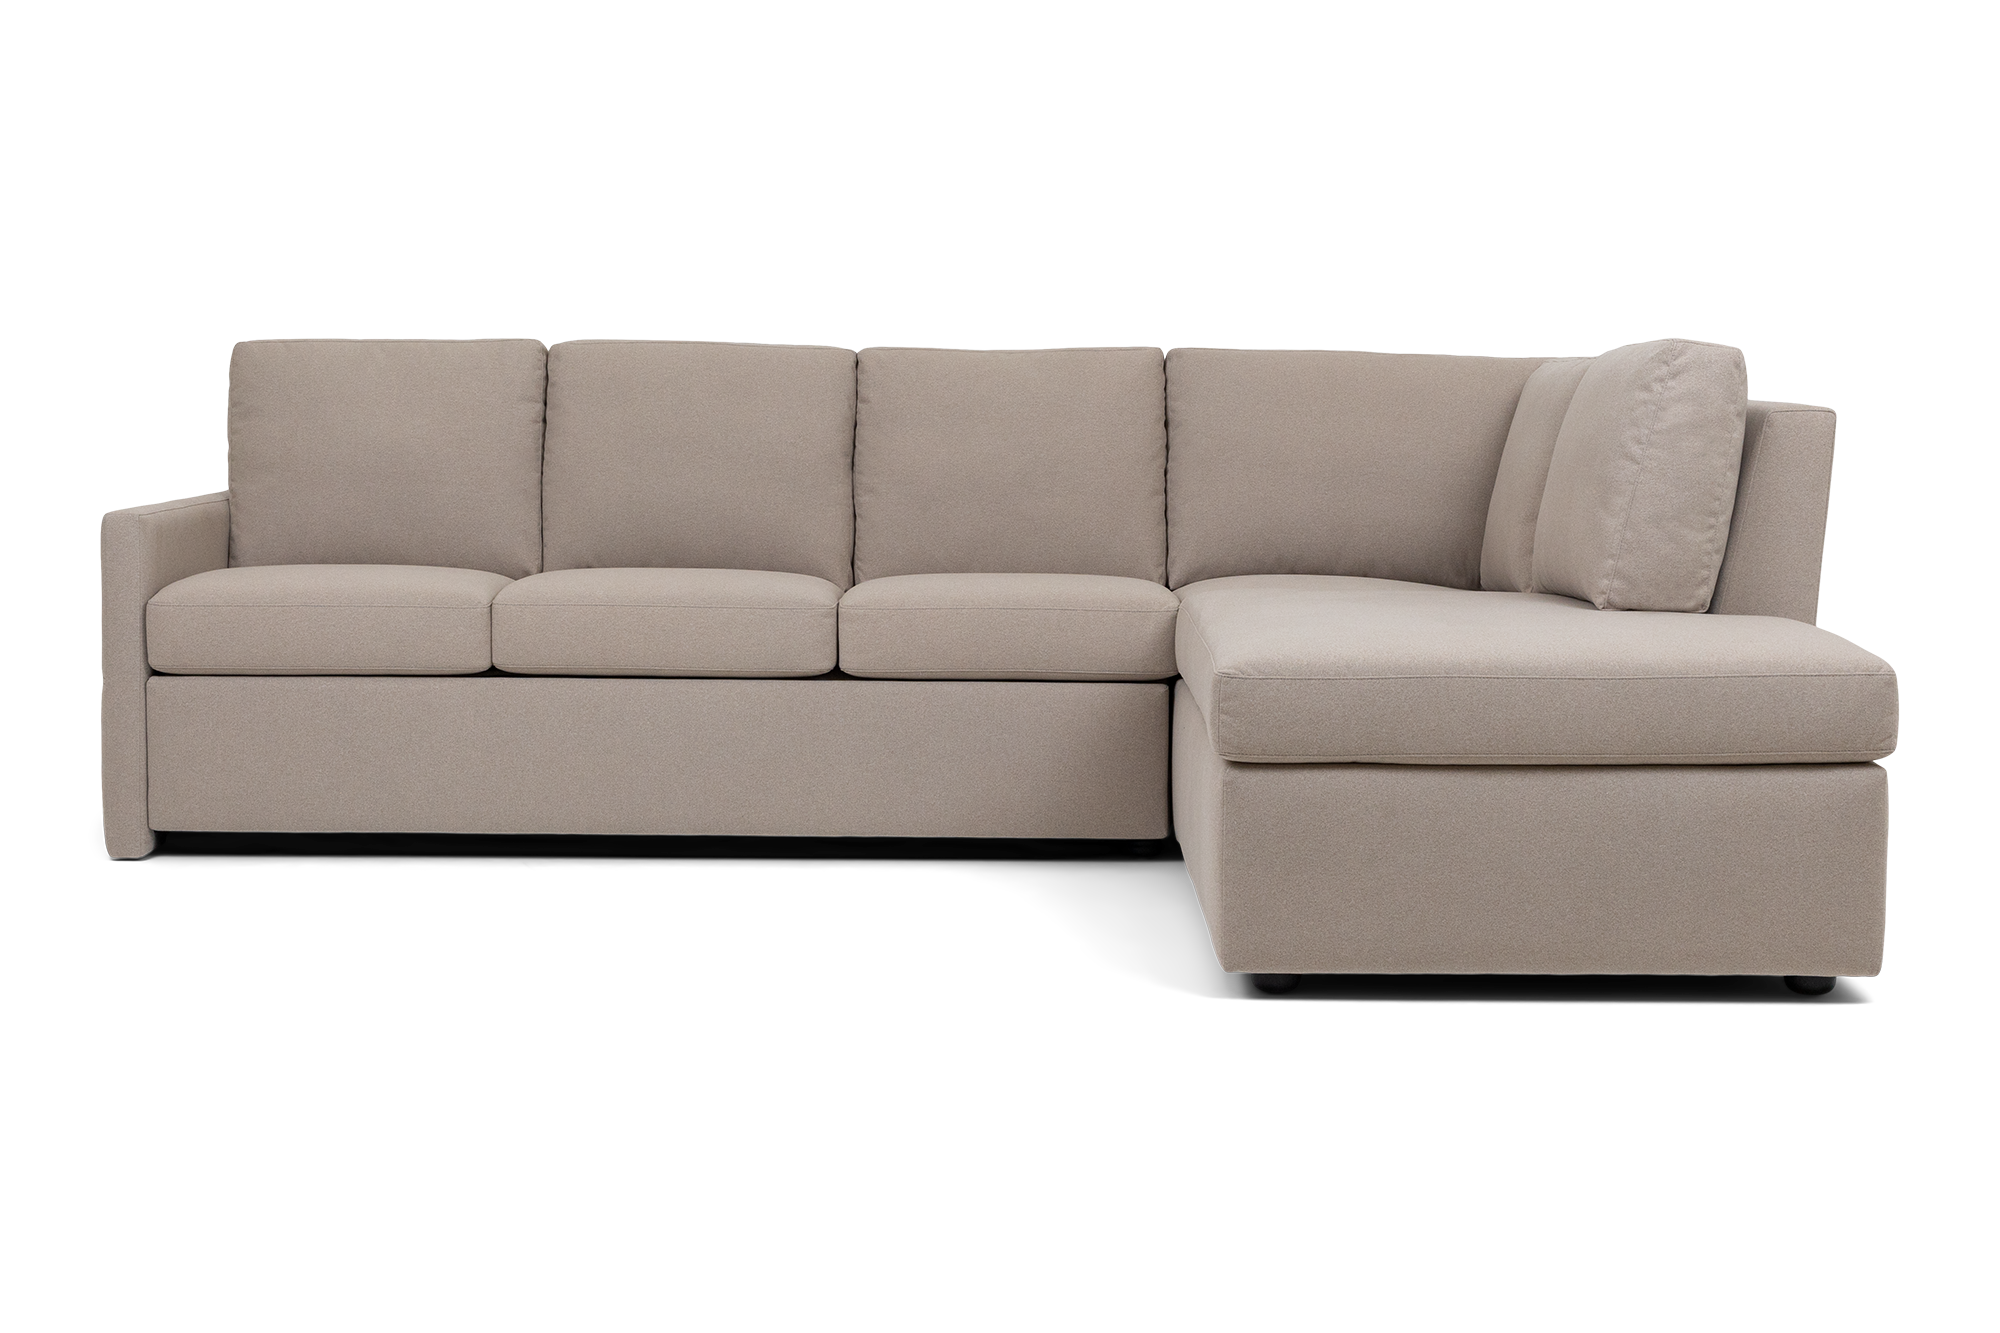 Bentley Comfort Sleeper Sofa